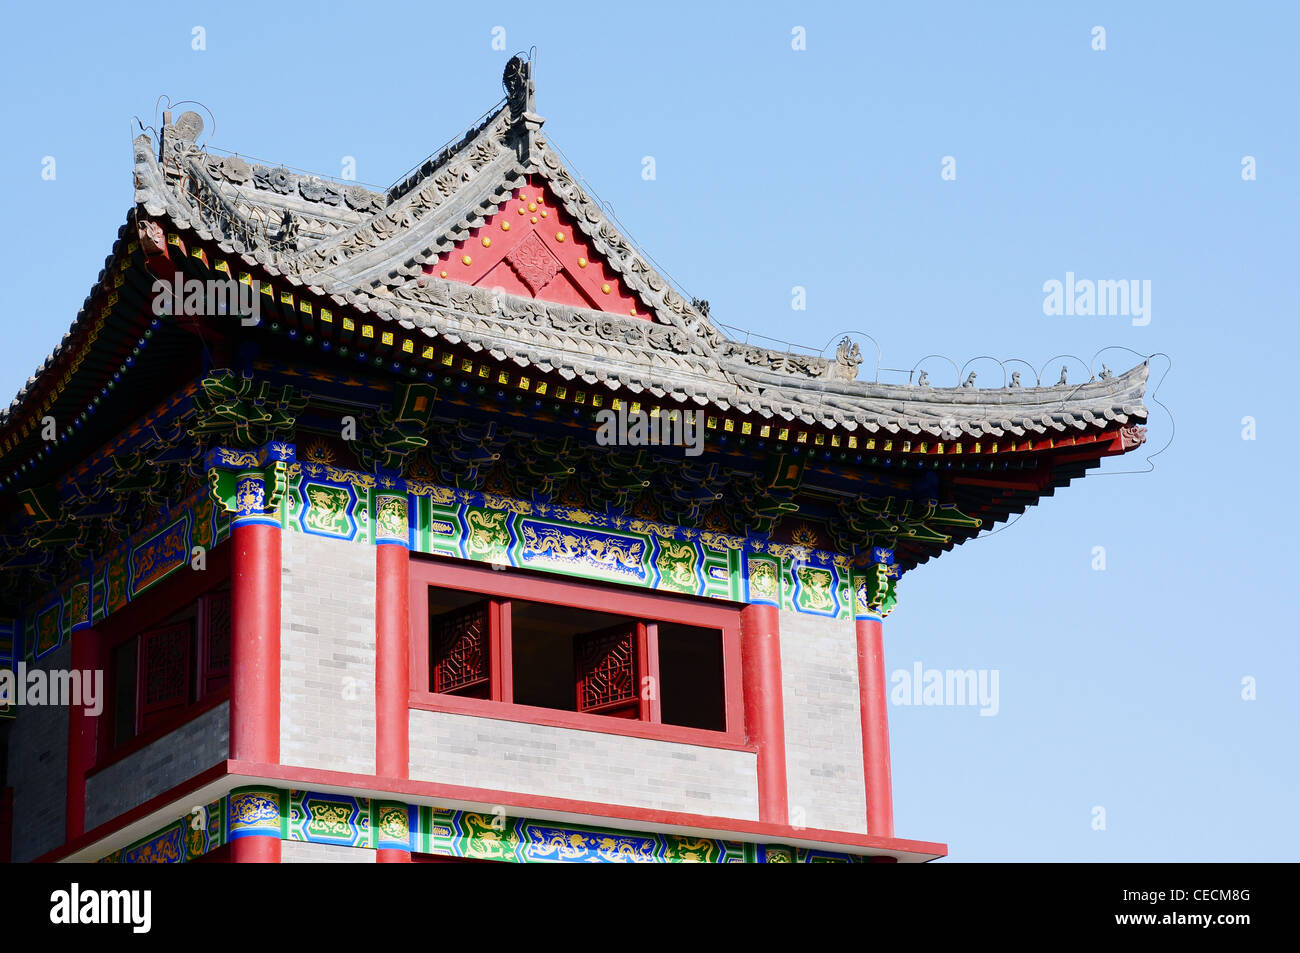 Edificio Asia Asia china antigua arquitectura china tradicional diseño templo rojo decoración cultura historia antiguo símbolo Foto de stock